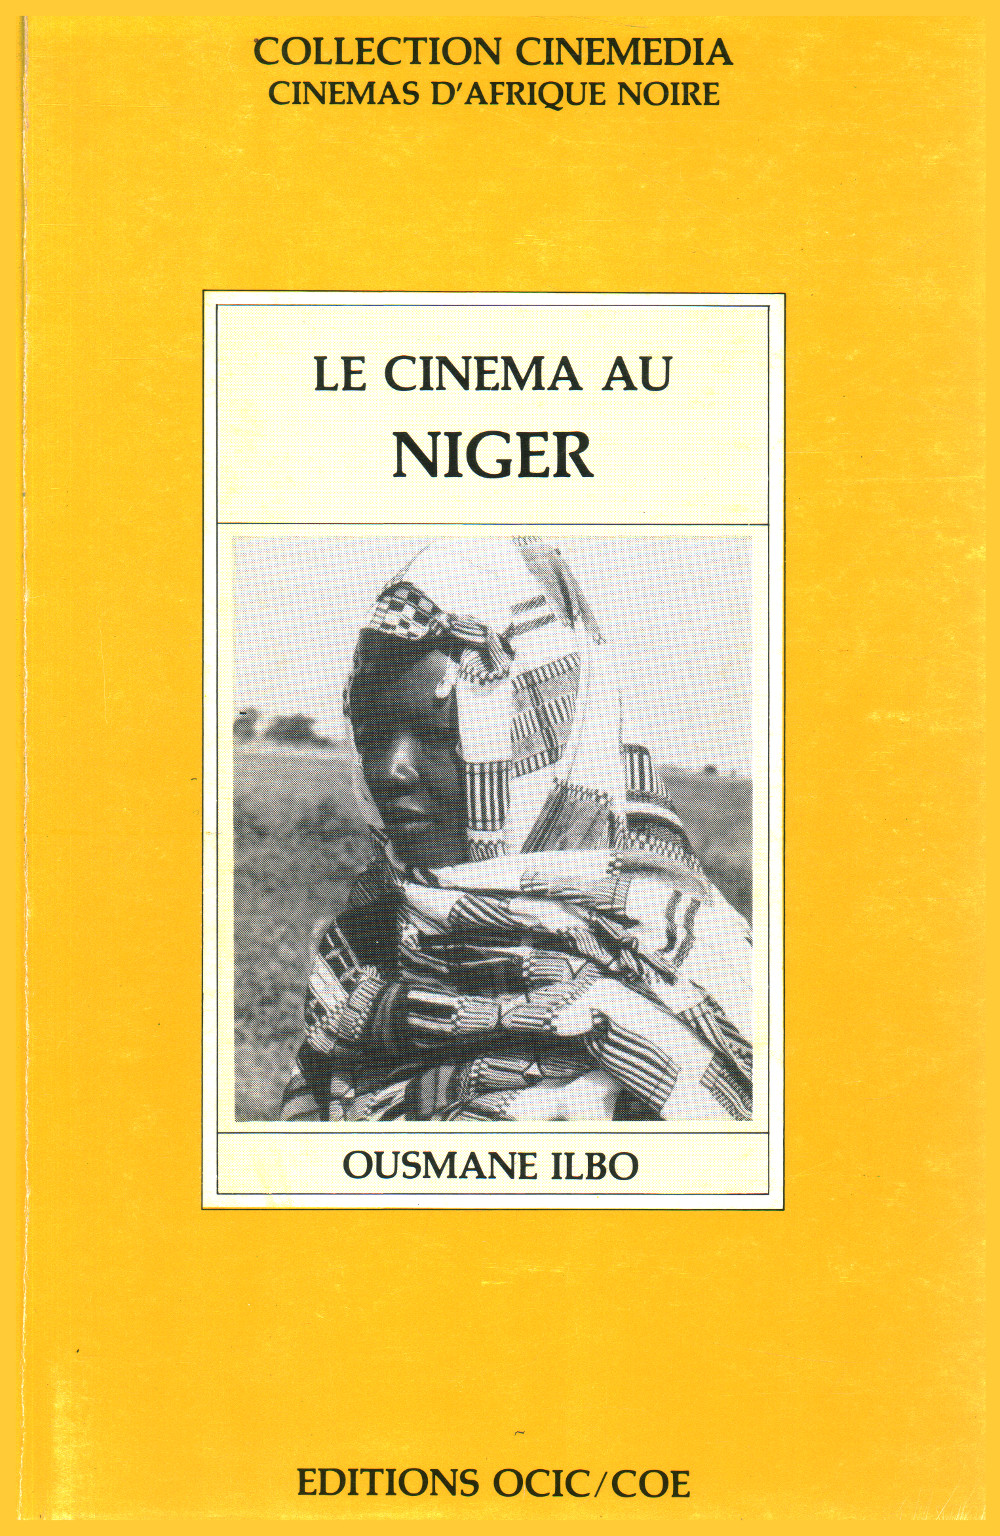 The cinema au Niger, s.a.